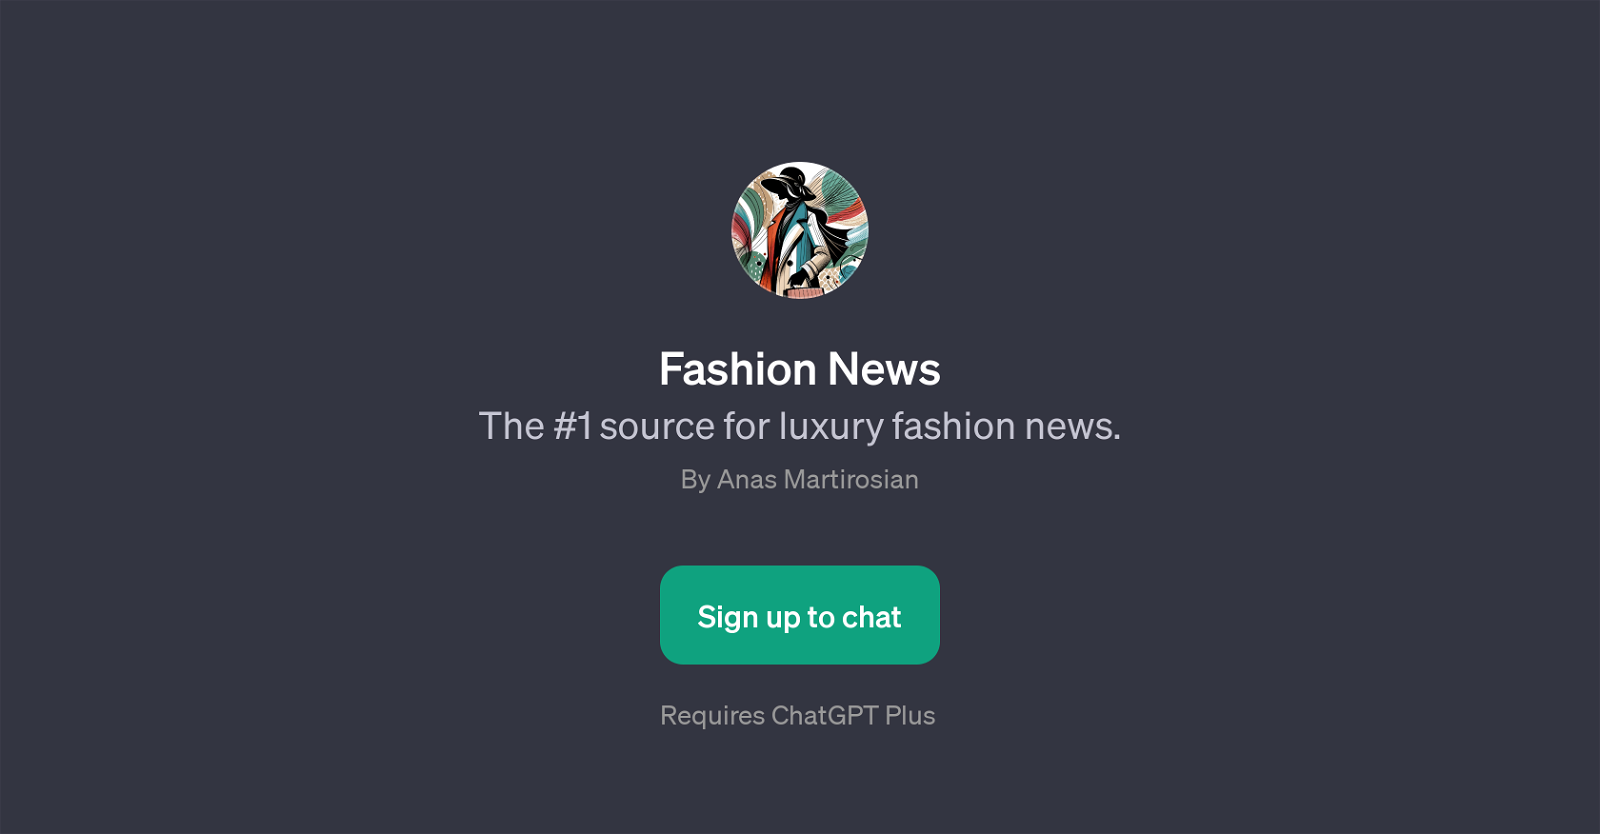 Fashion News website